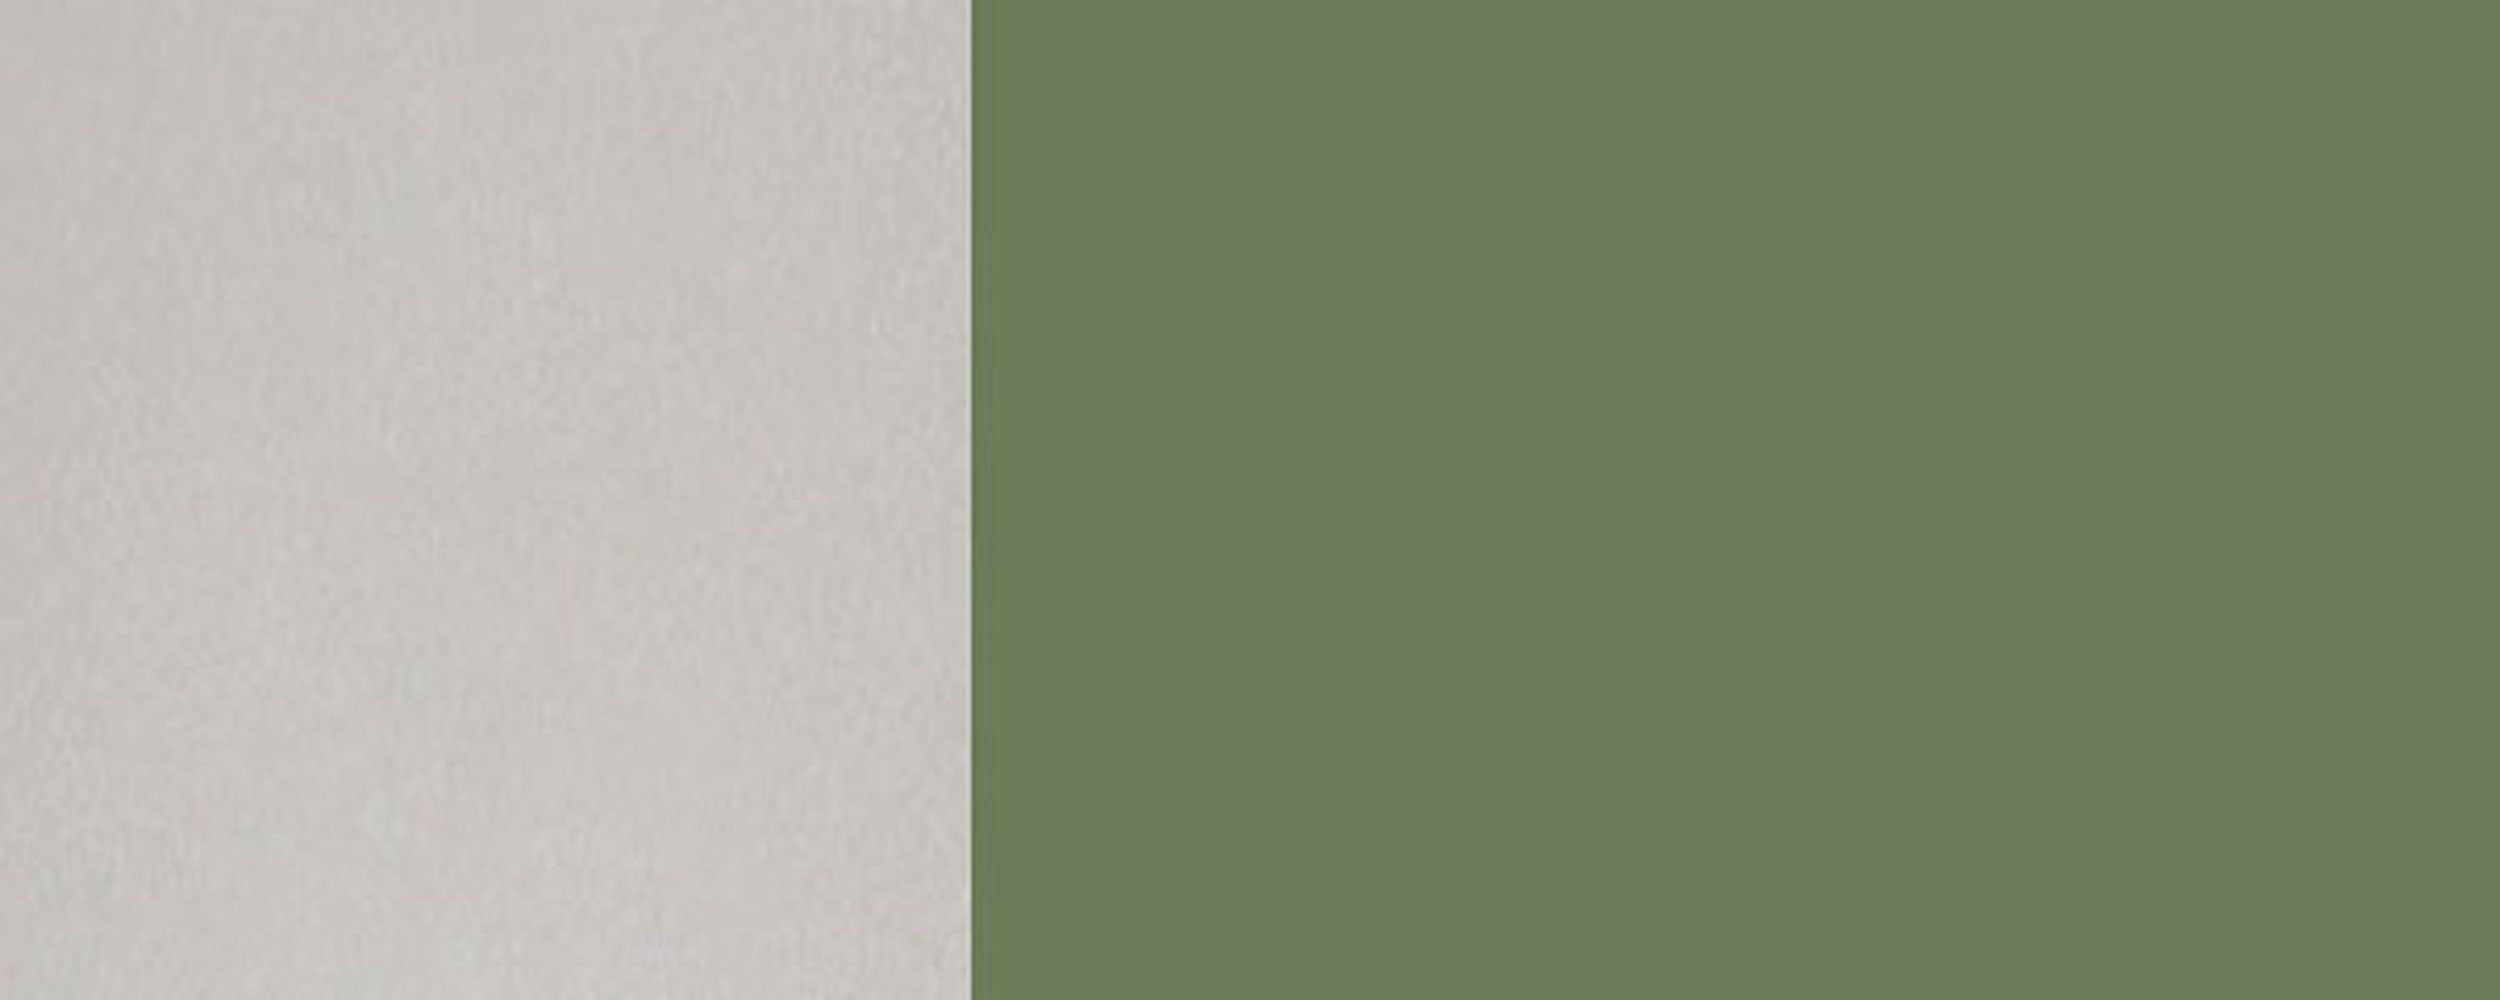 Feldmann-Wohnen Klapphängeschrank Tivoli 30cm wählbar matt resedagrün 1-türig Korpusfarbe (Tivoli) 6011 Front- RAL und